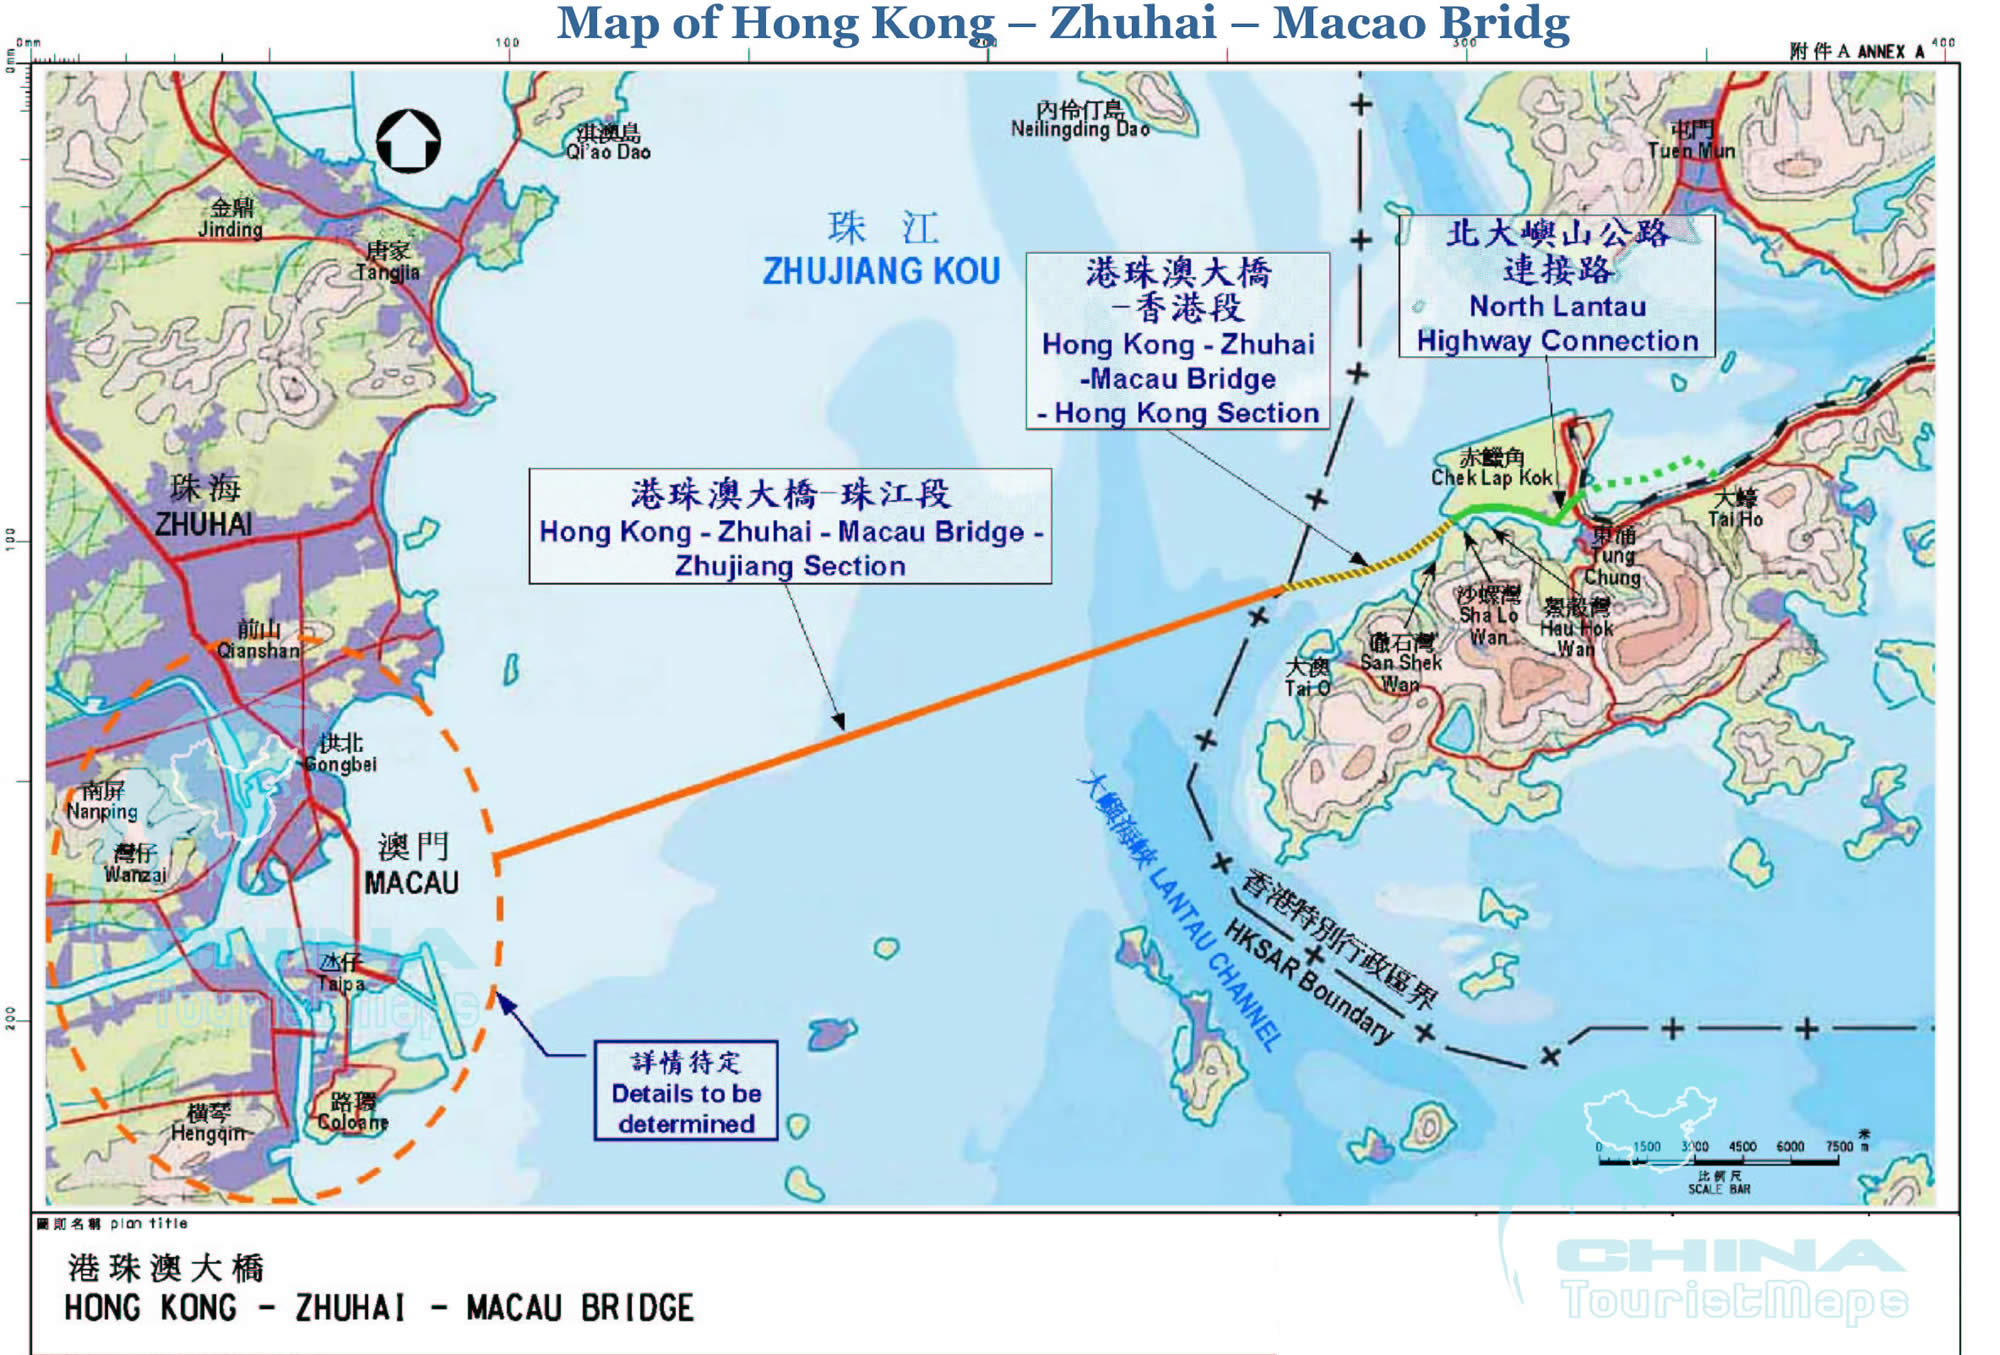 makao köprüsü haritası hong kong zhuhai